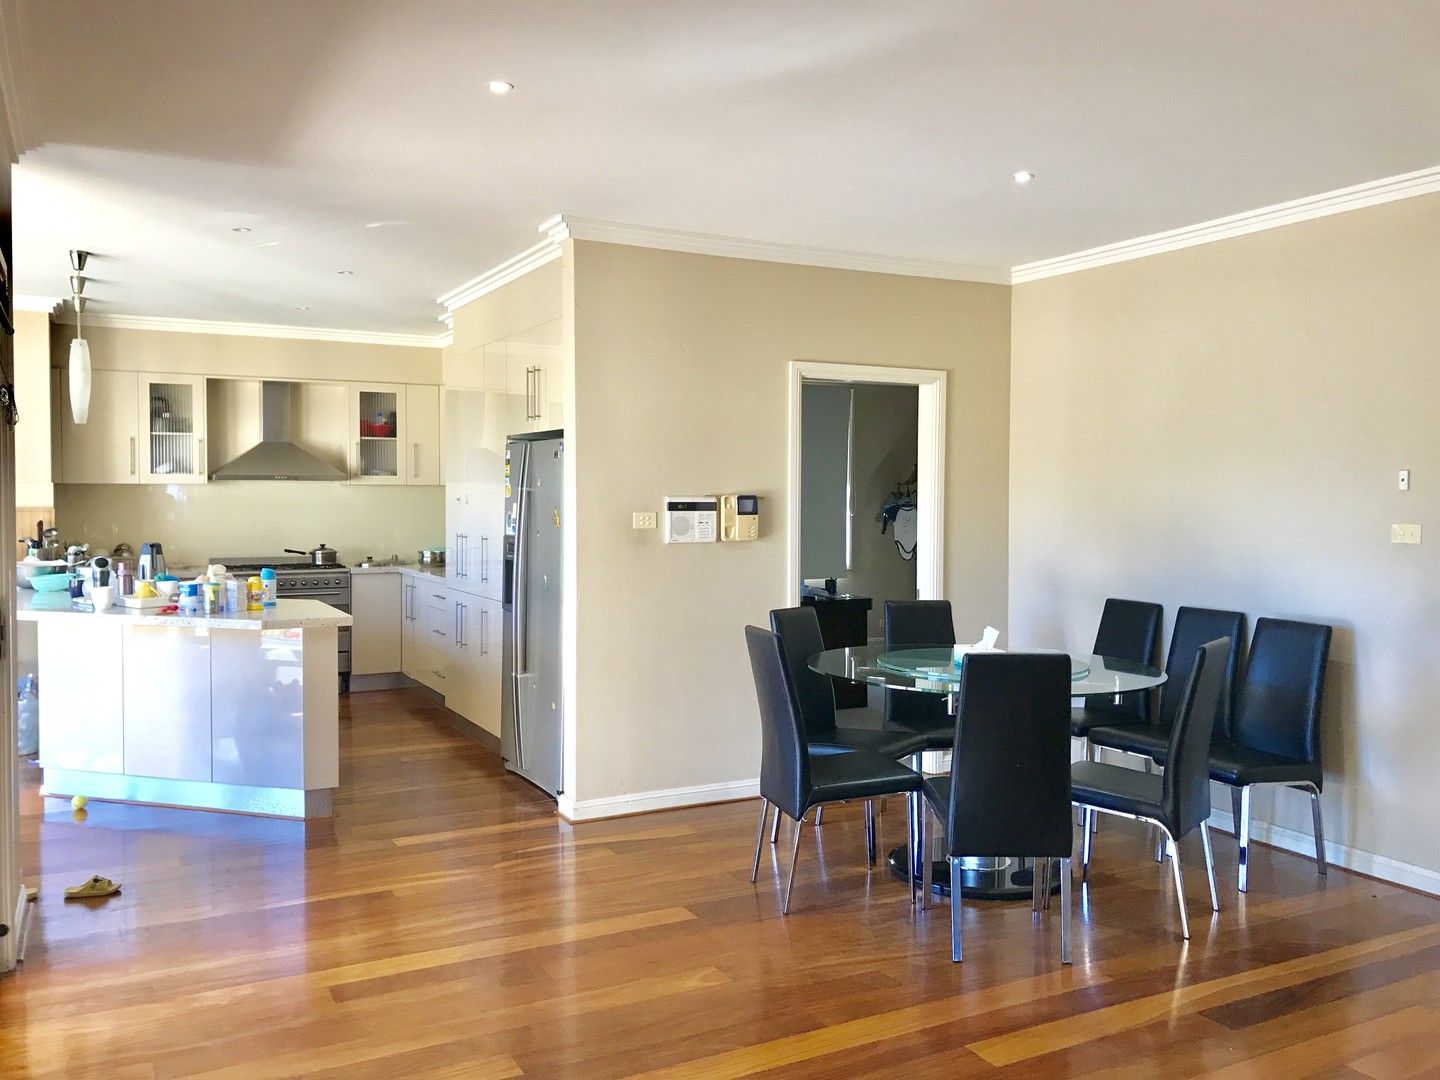 4 bedrooms House in 2 Storey Home KILLARA NSW, 2071